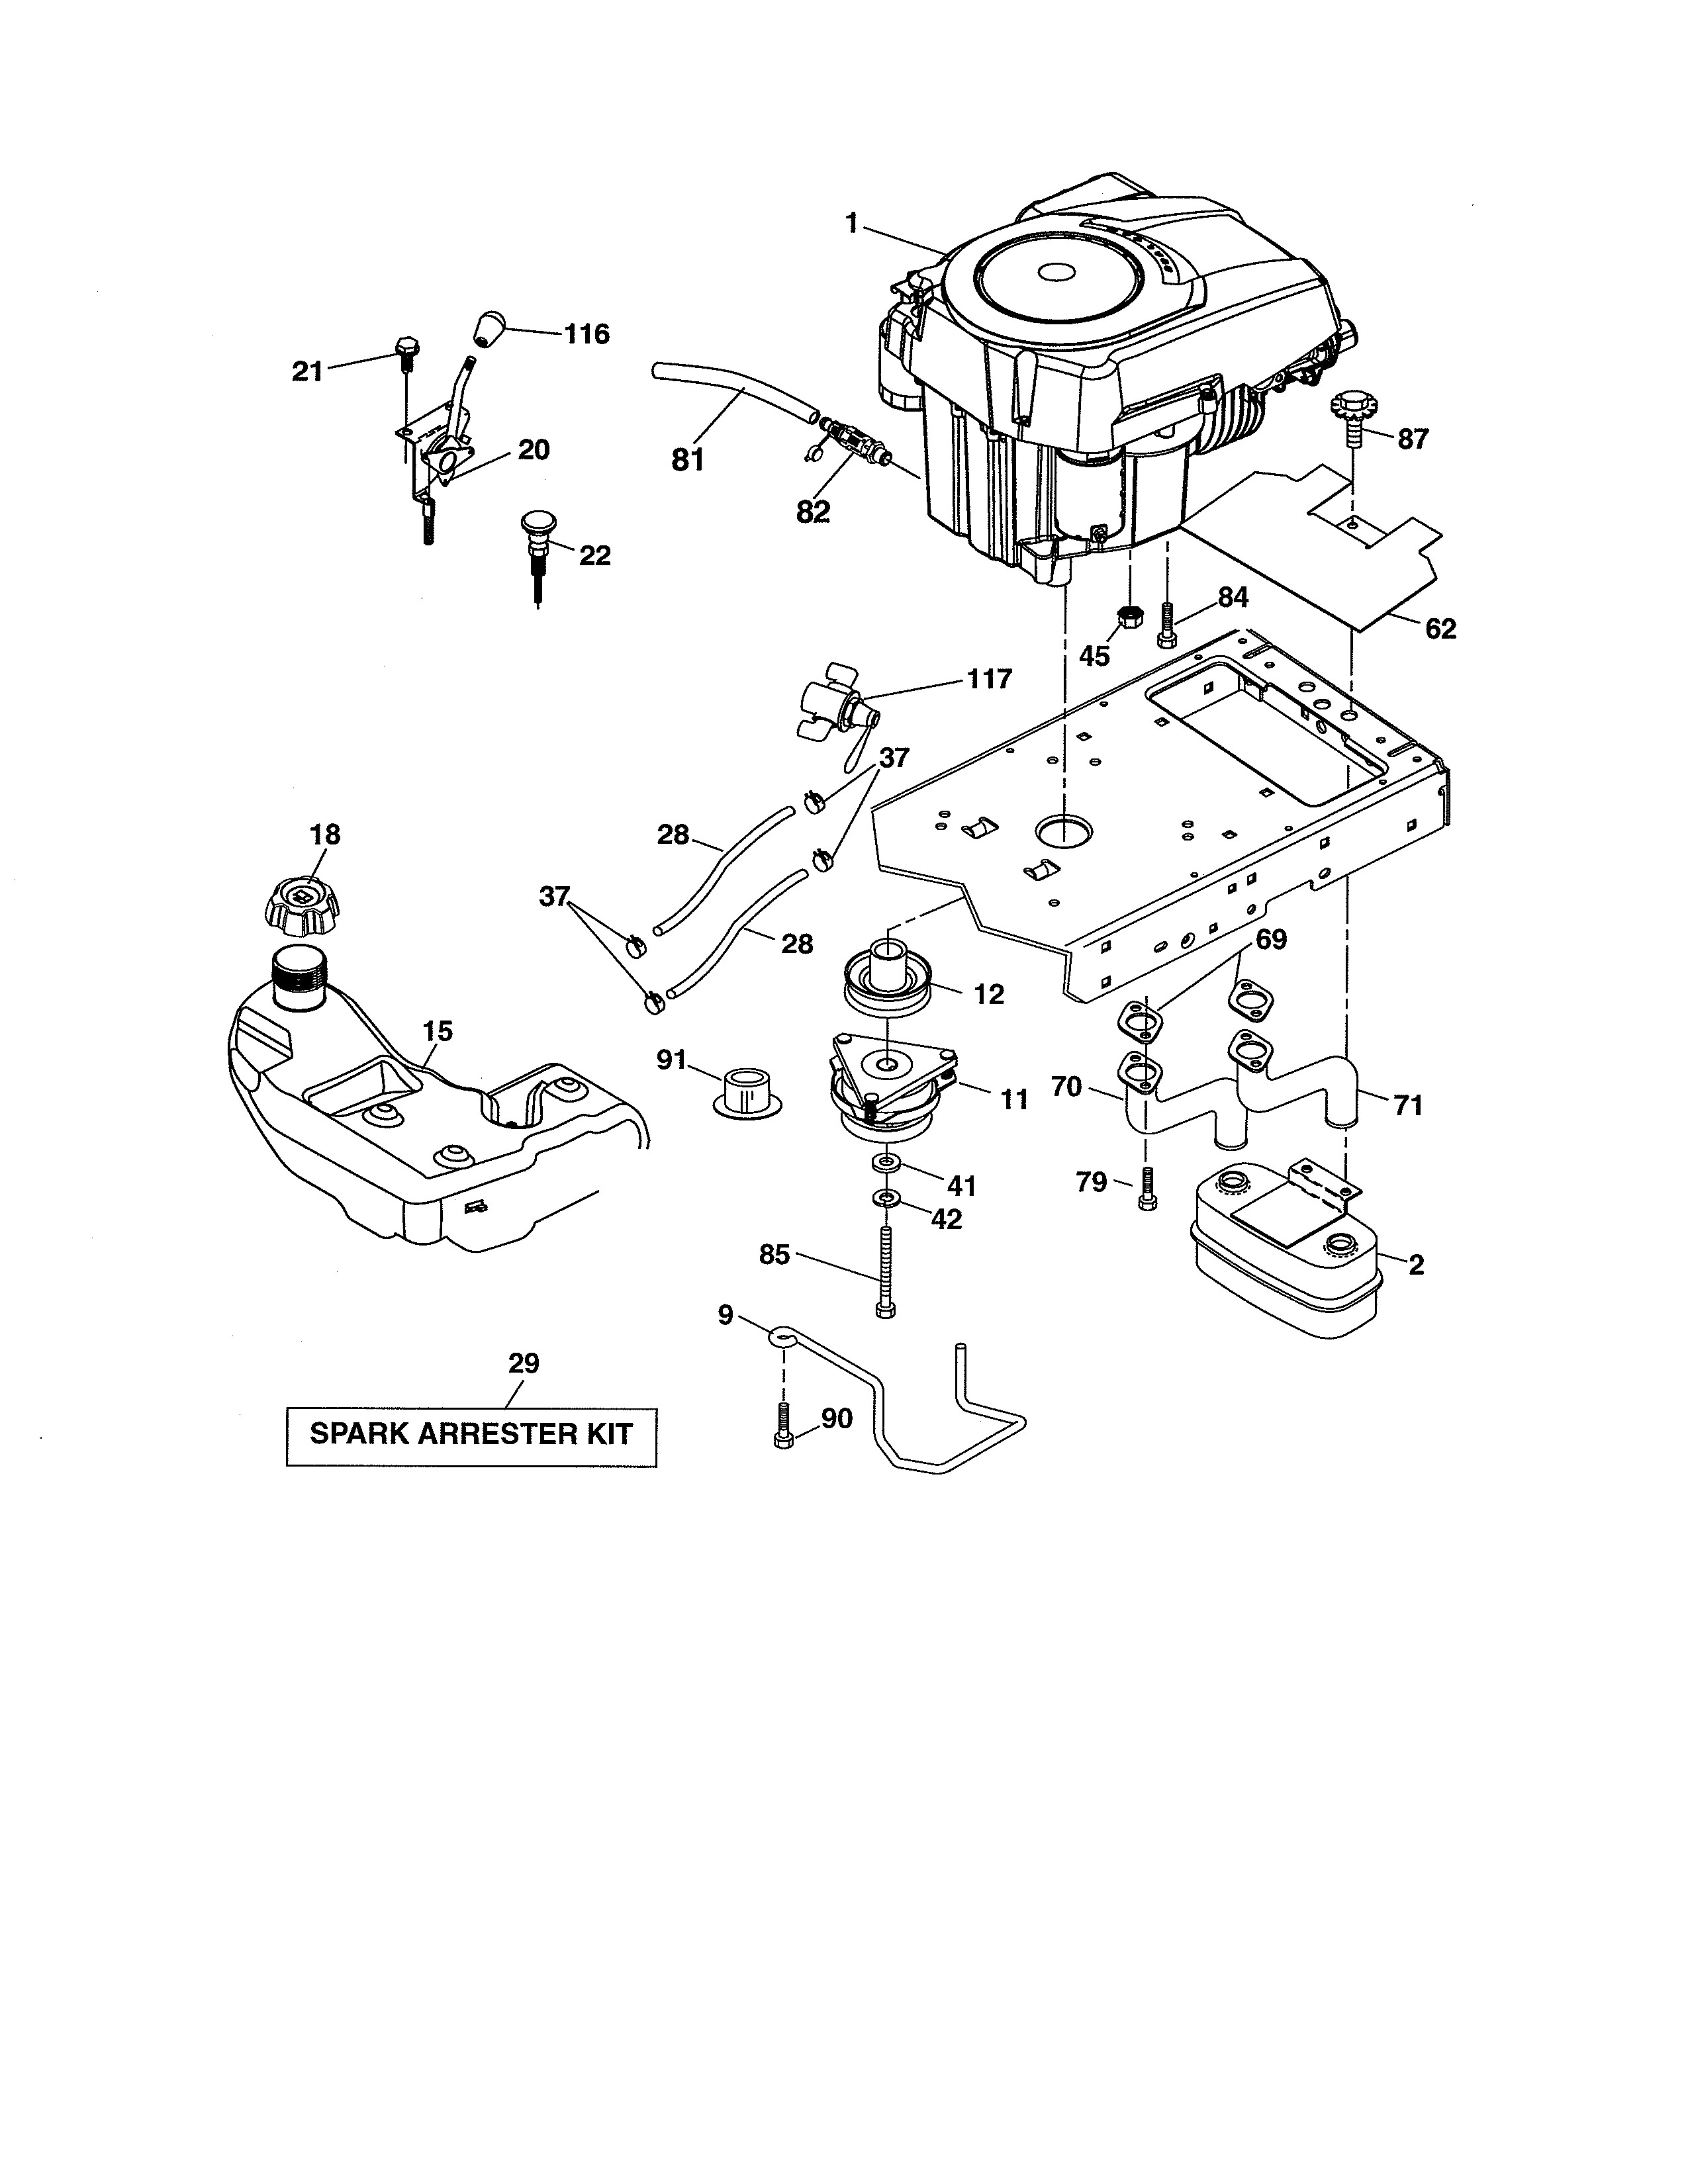 Diagram Of Lawn Mower Engine Craftsman Model Lawn Tractor Genuine Parts Of Diagram Of Lawn Mower Engine